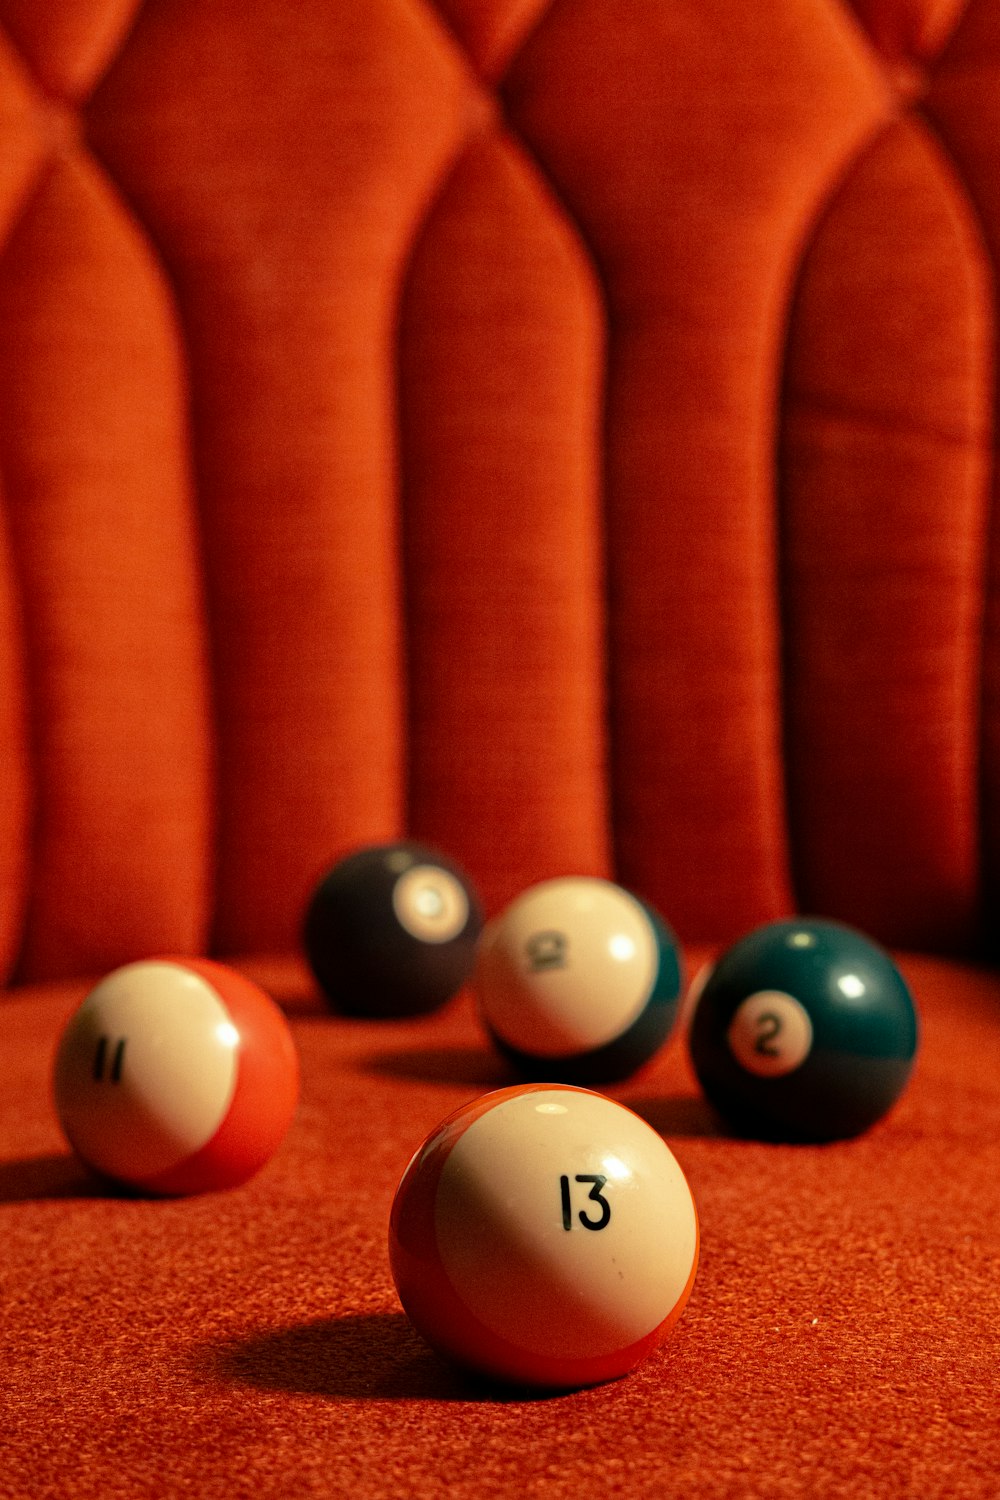 white and green billiard ball